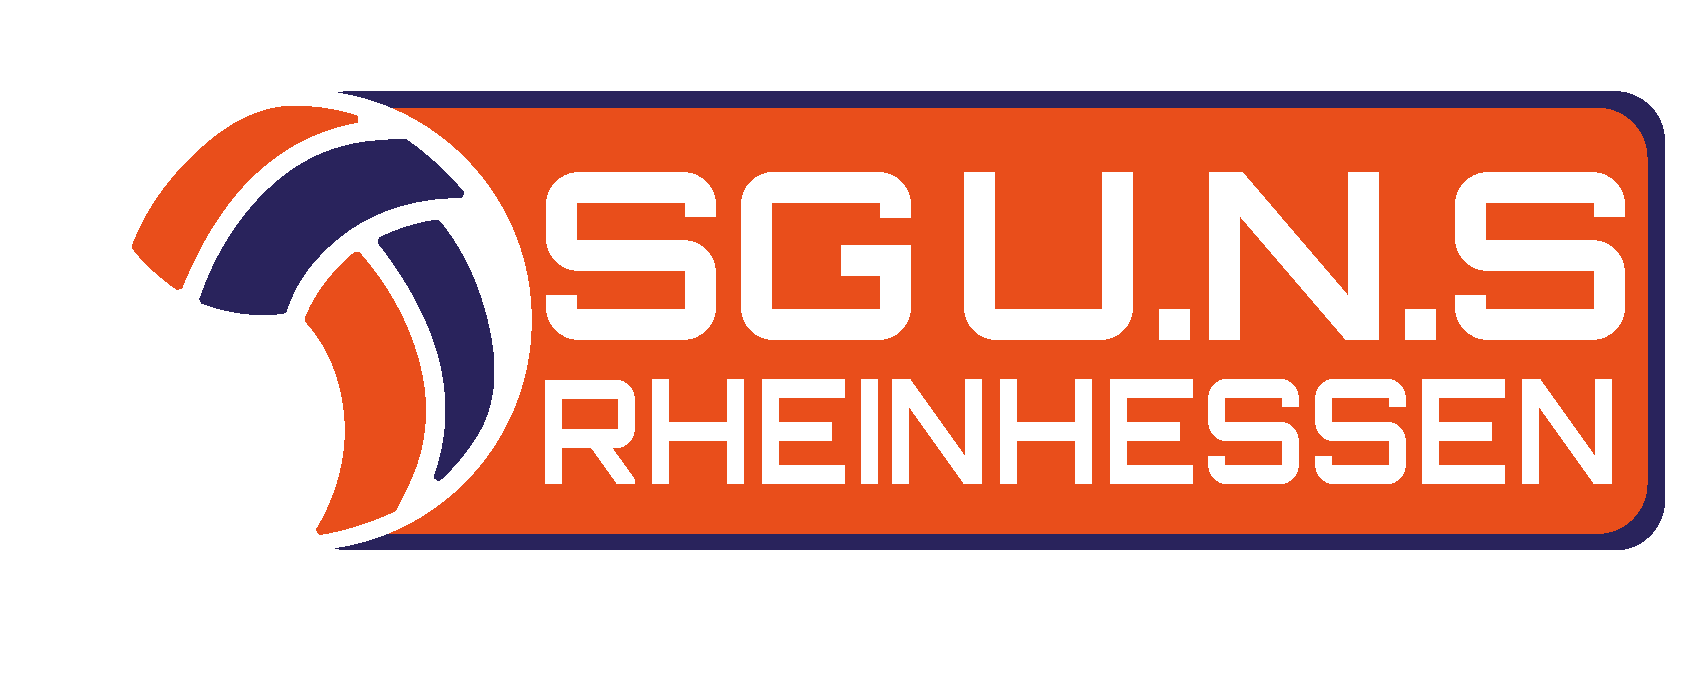 SG U.N.S Rheinhessen